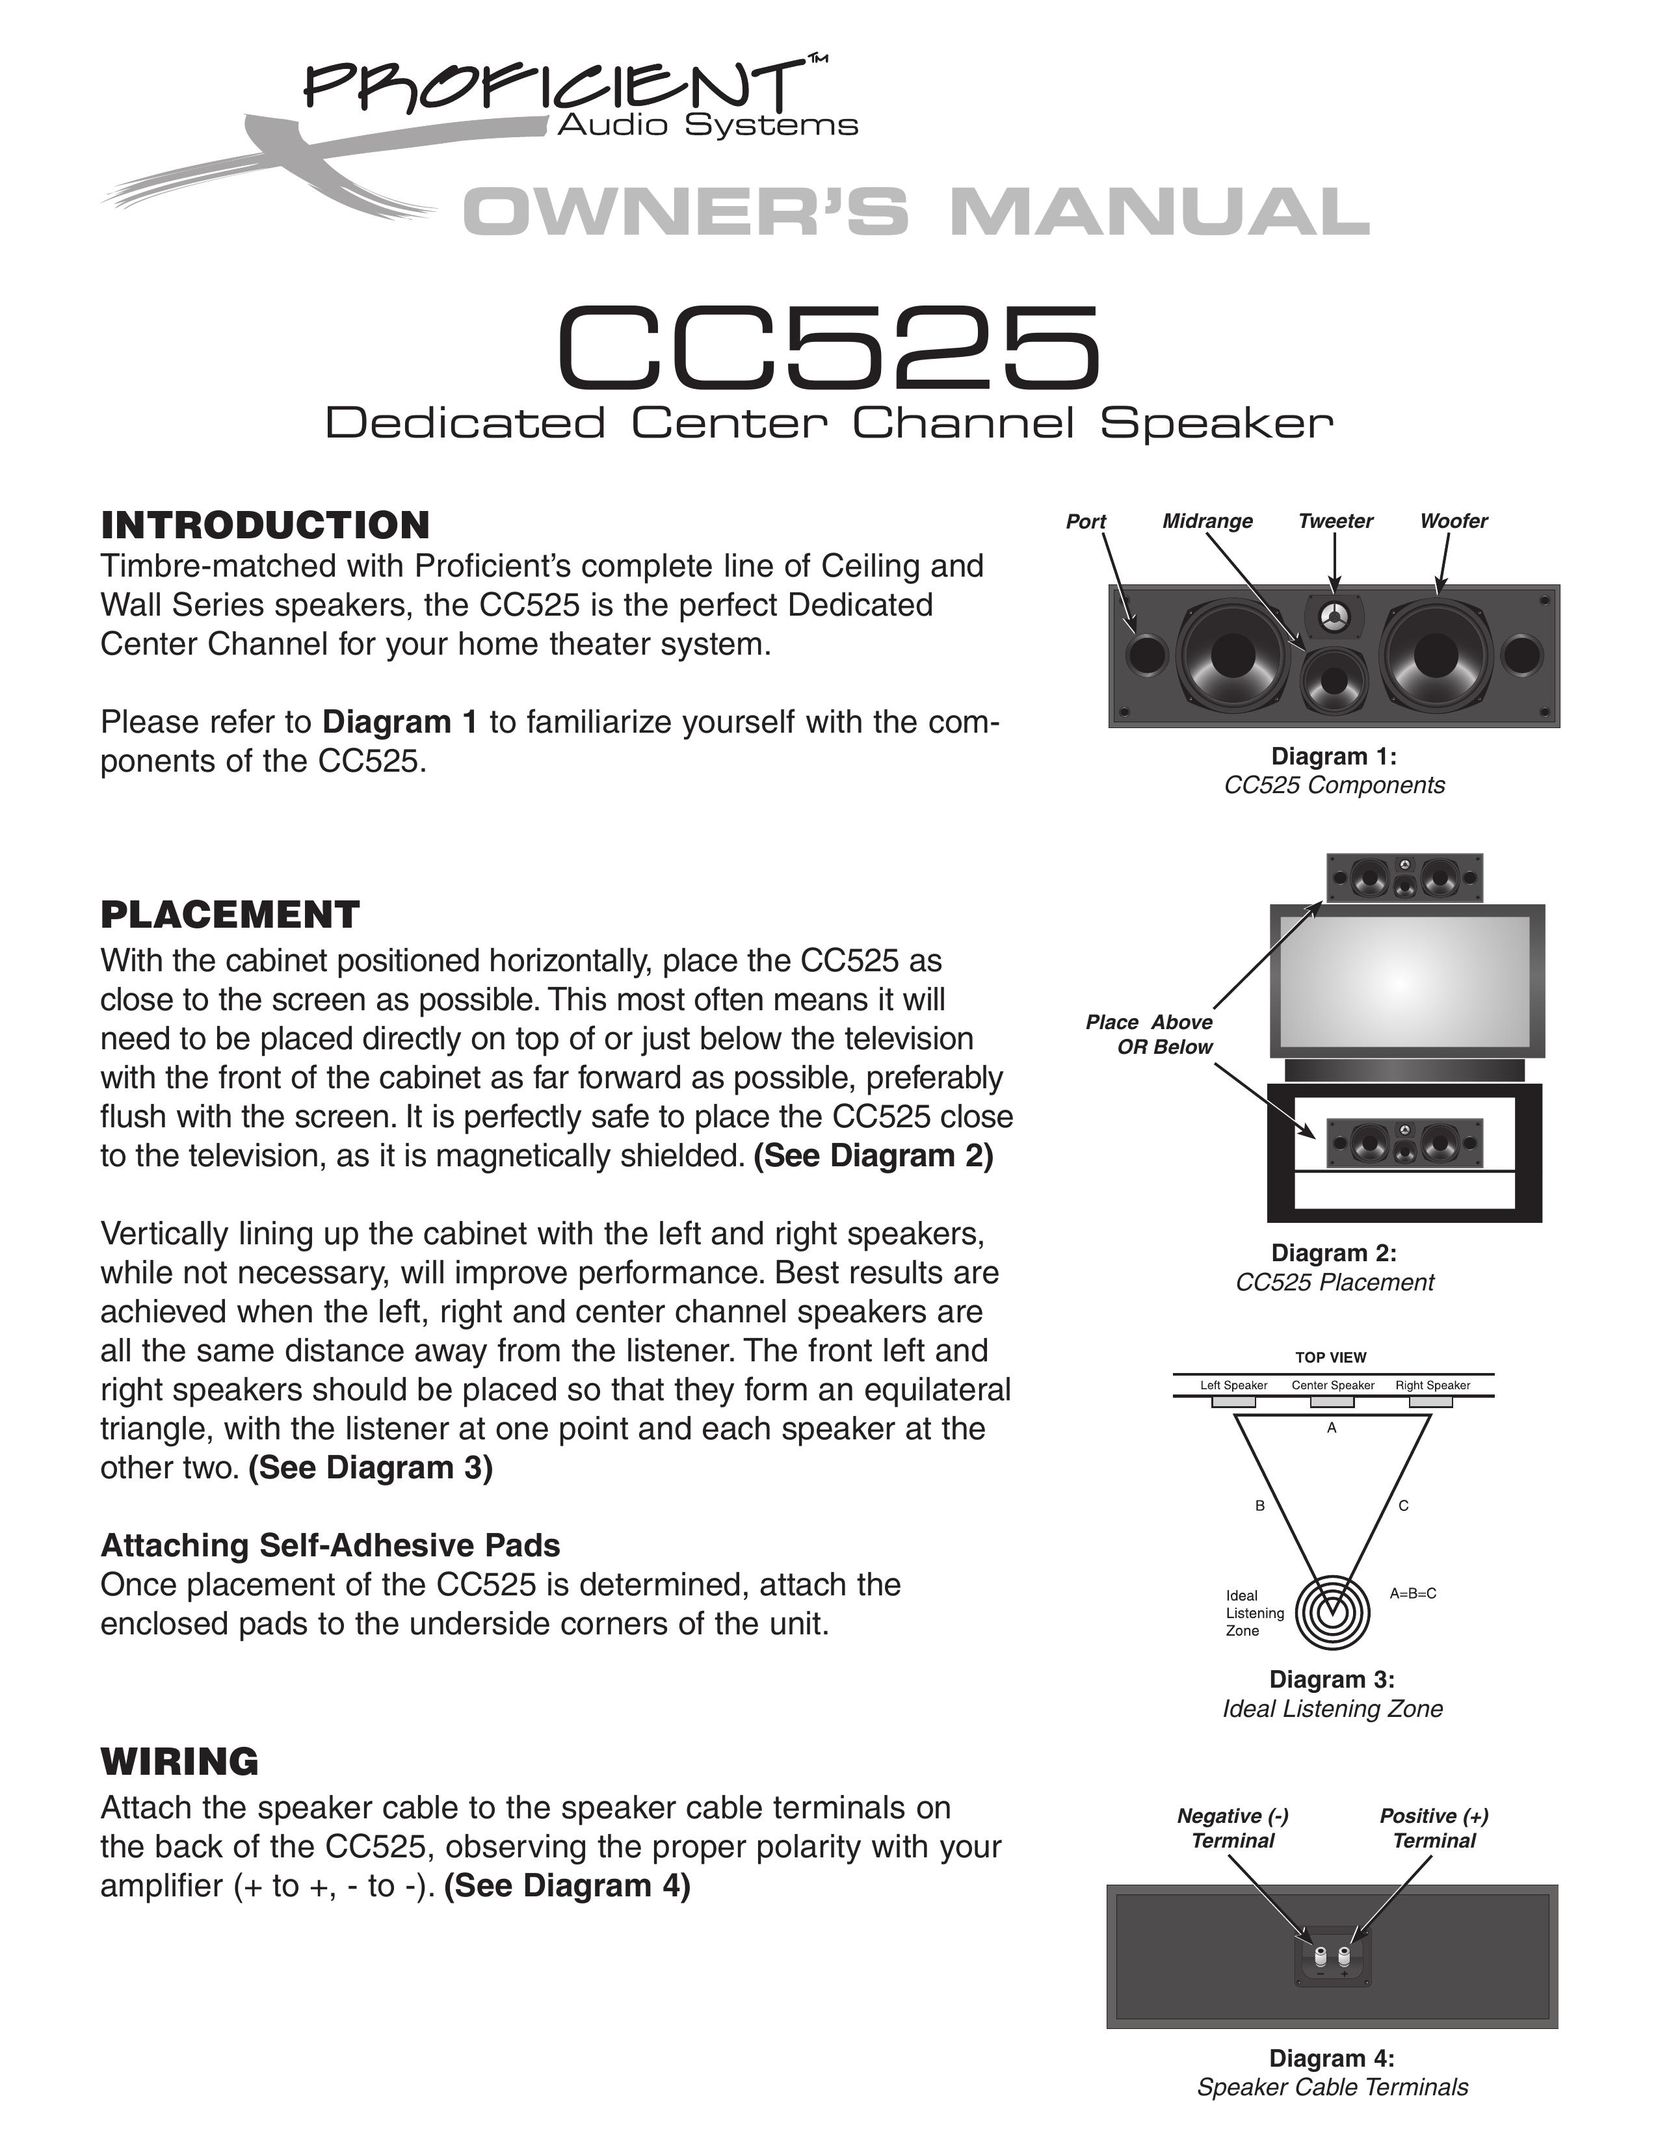 Proficient Audio Systems CC525 Speaker System User Manual